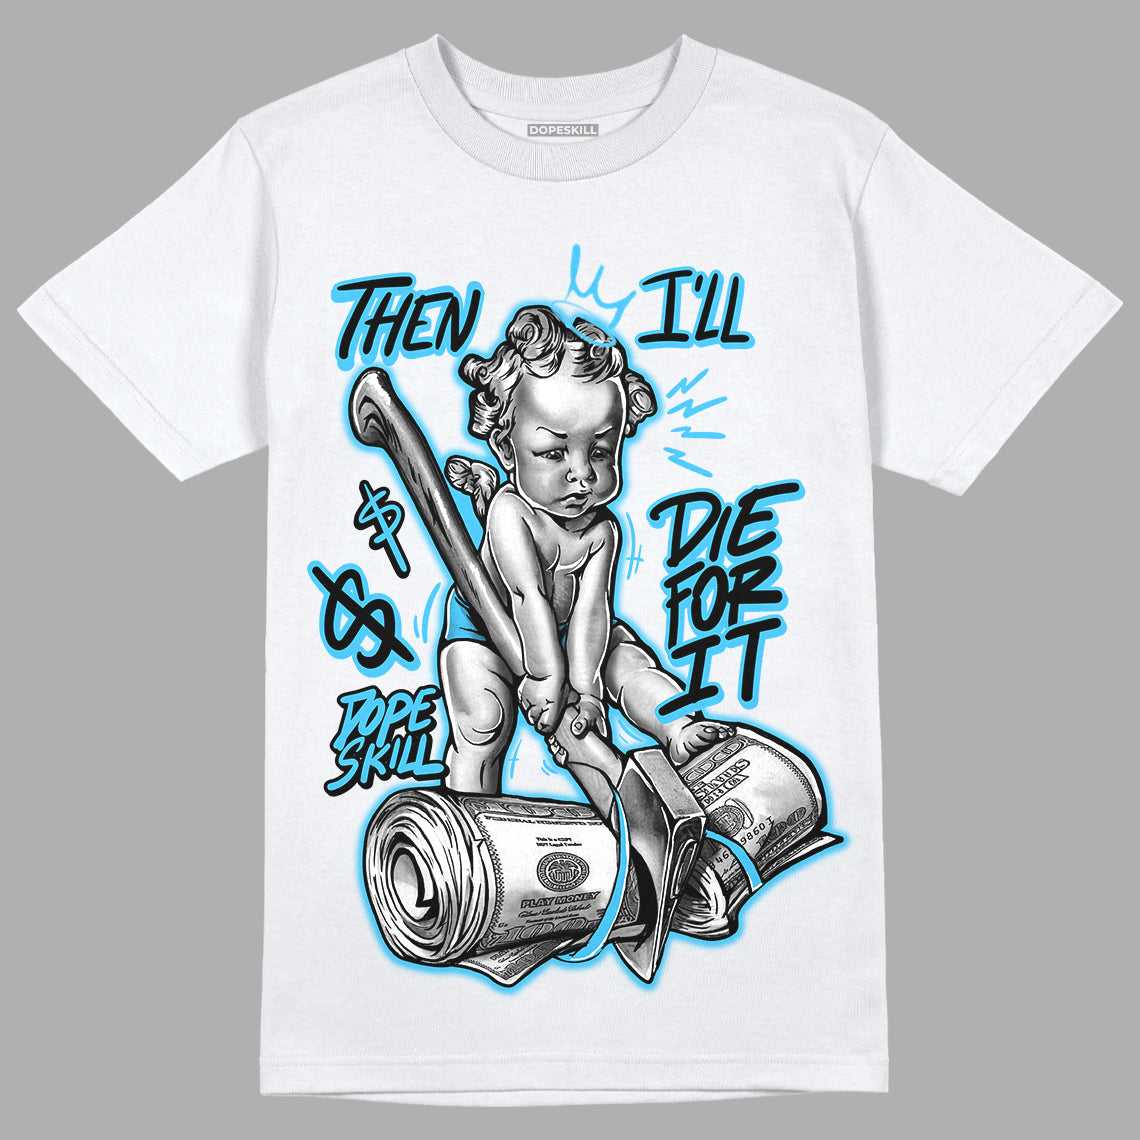 University Blue 13s DopeSkill T-Shirt Then I'll Die For It Graphic - White 